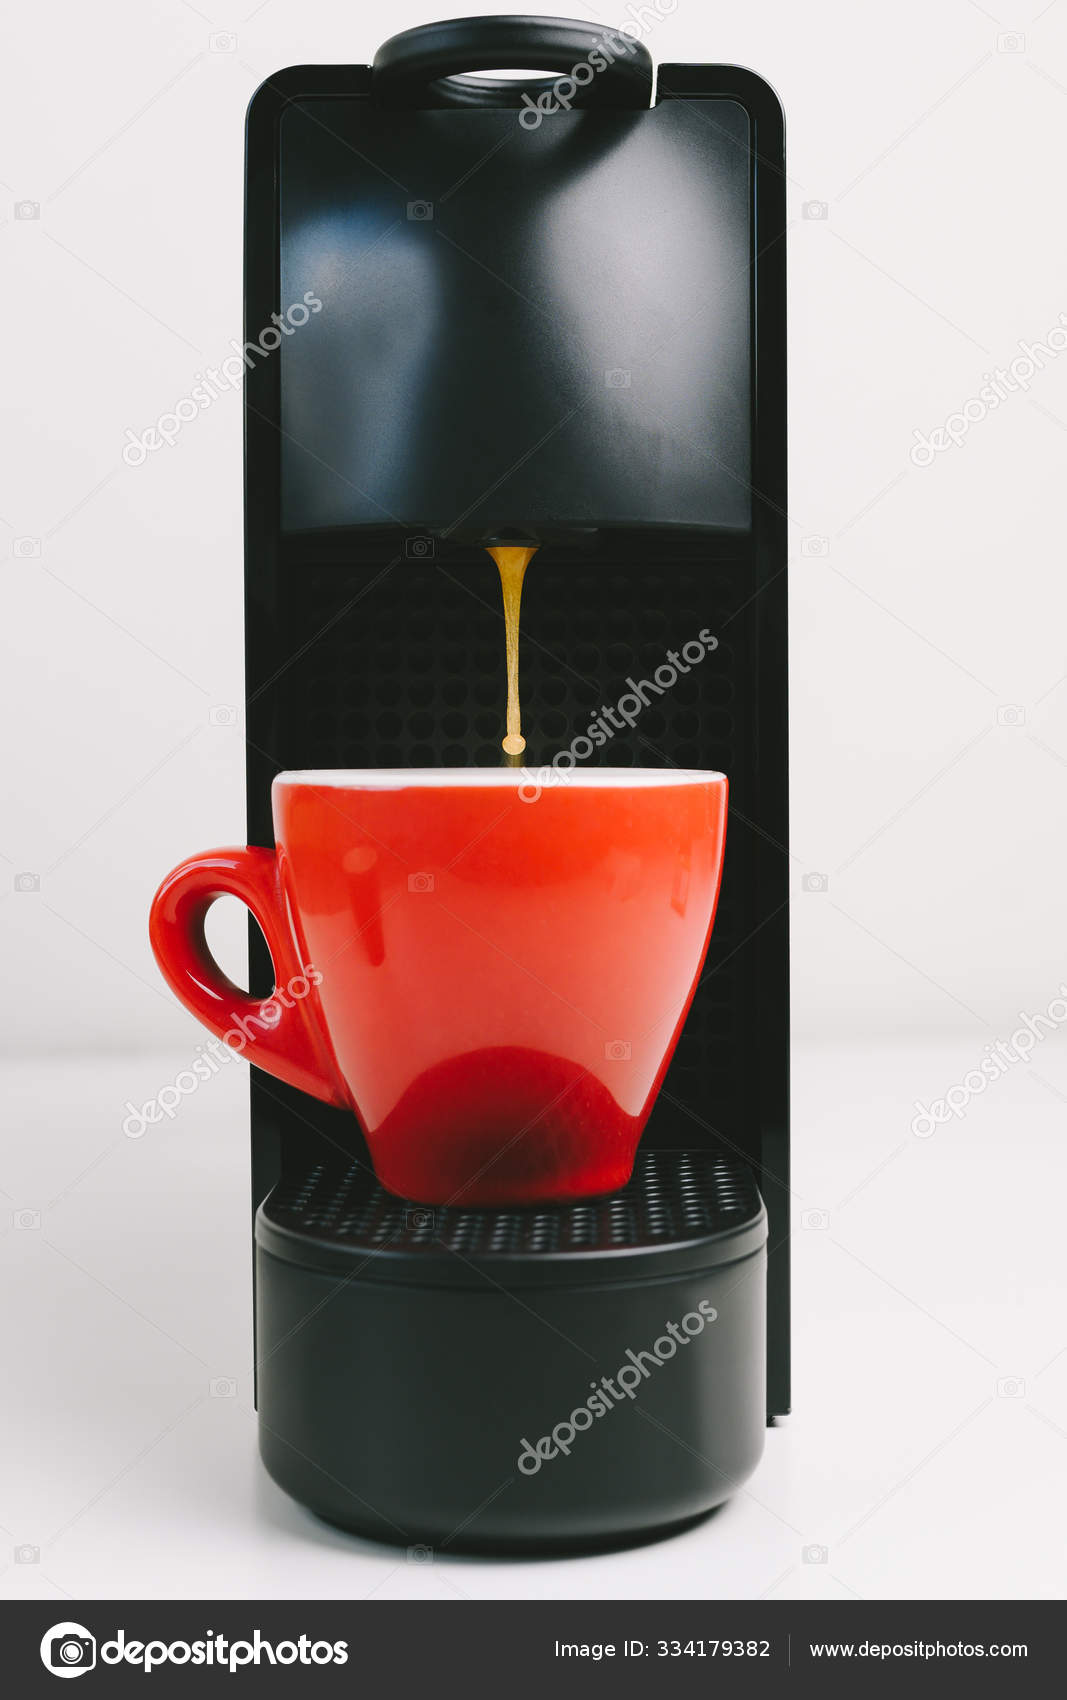 https://st3.depositphotos.com/7700164/33417/i/1600/depositphotos_334179382-stock-photo-making-coffee-with-espresso-machine.jpg